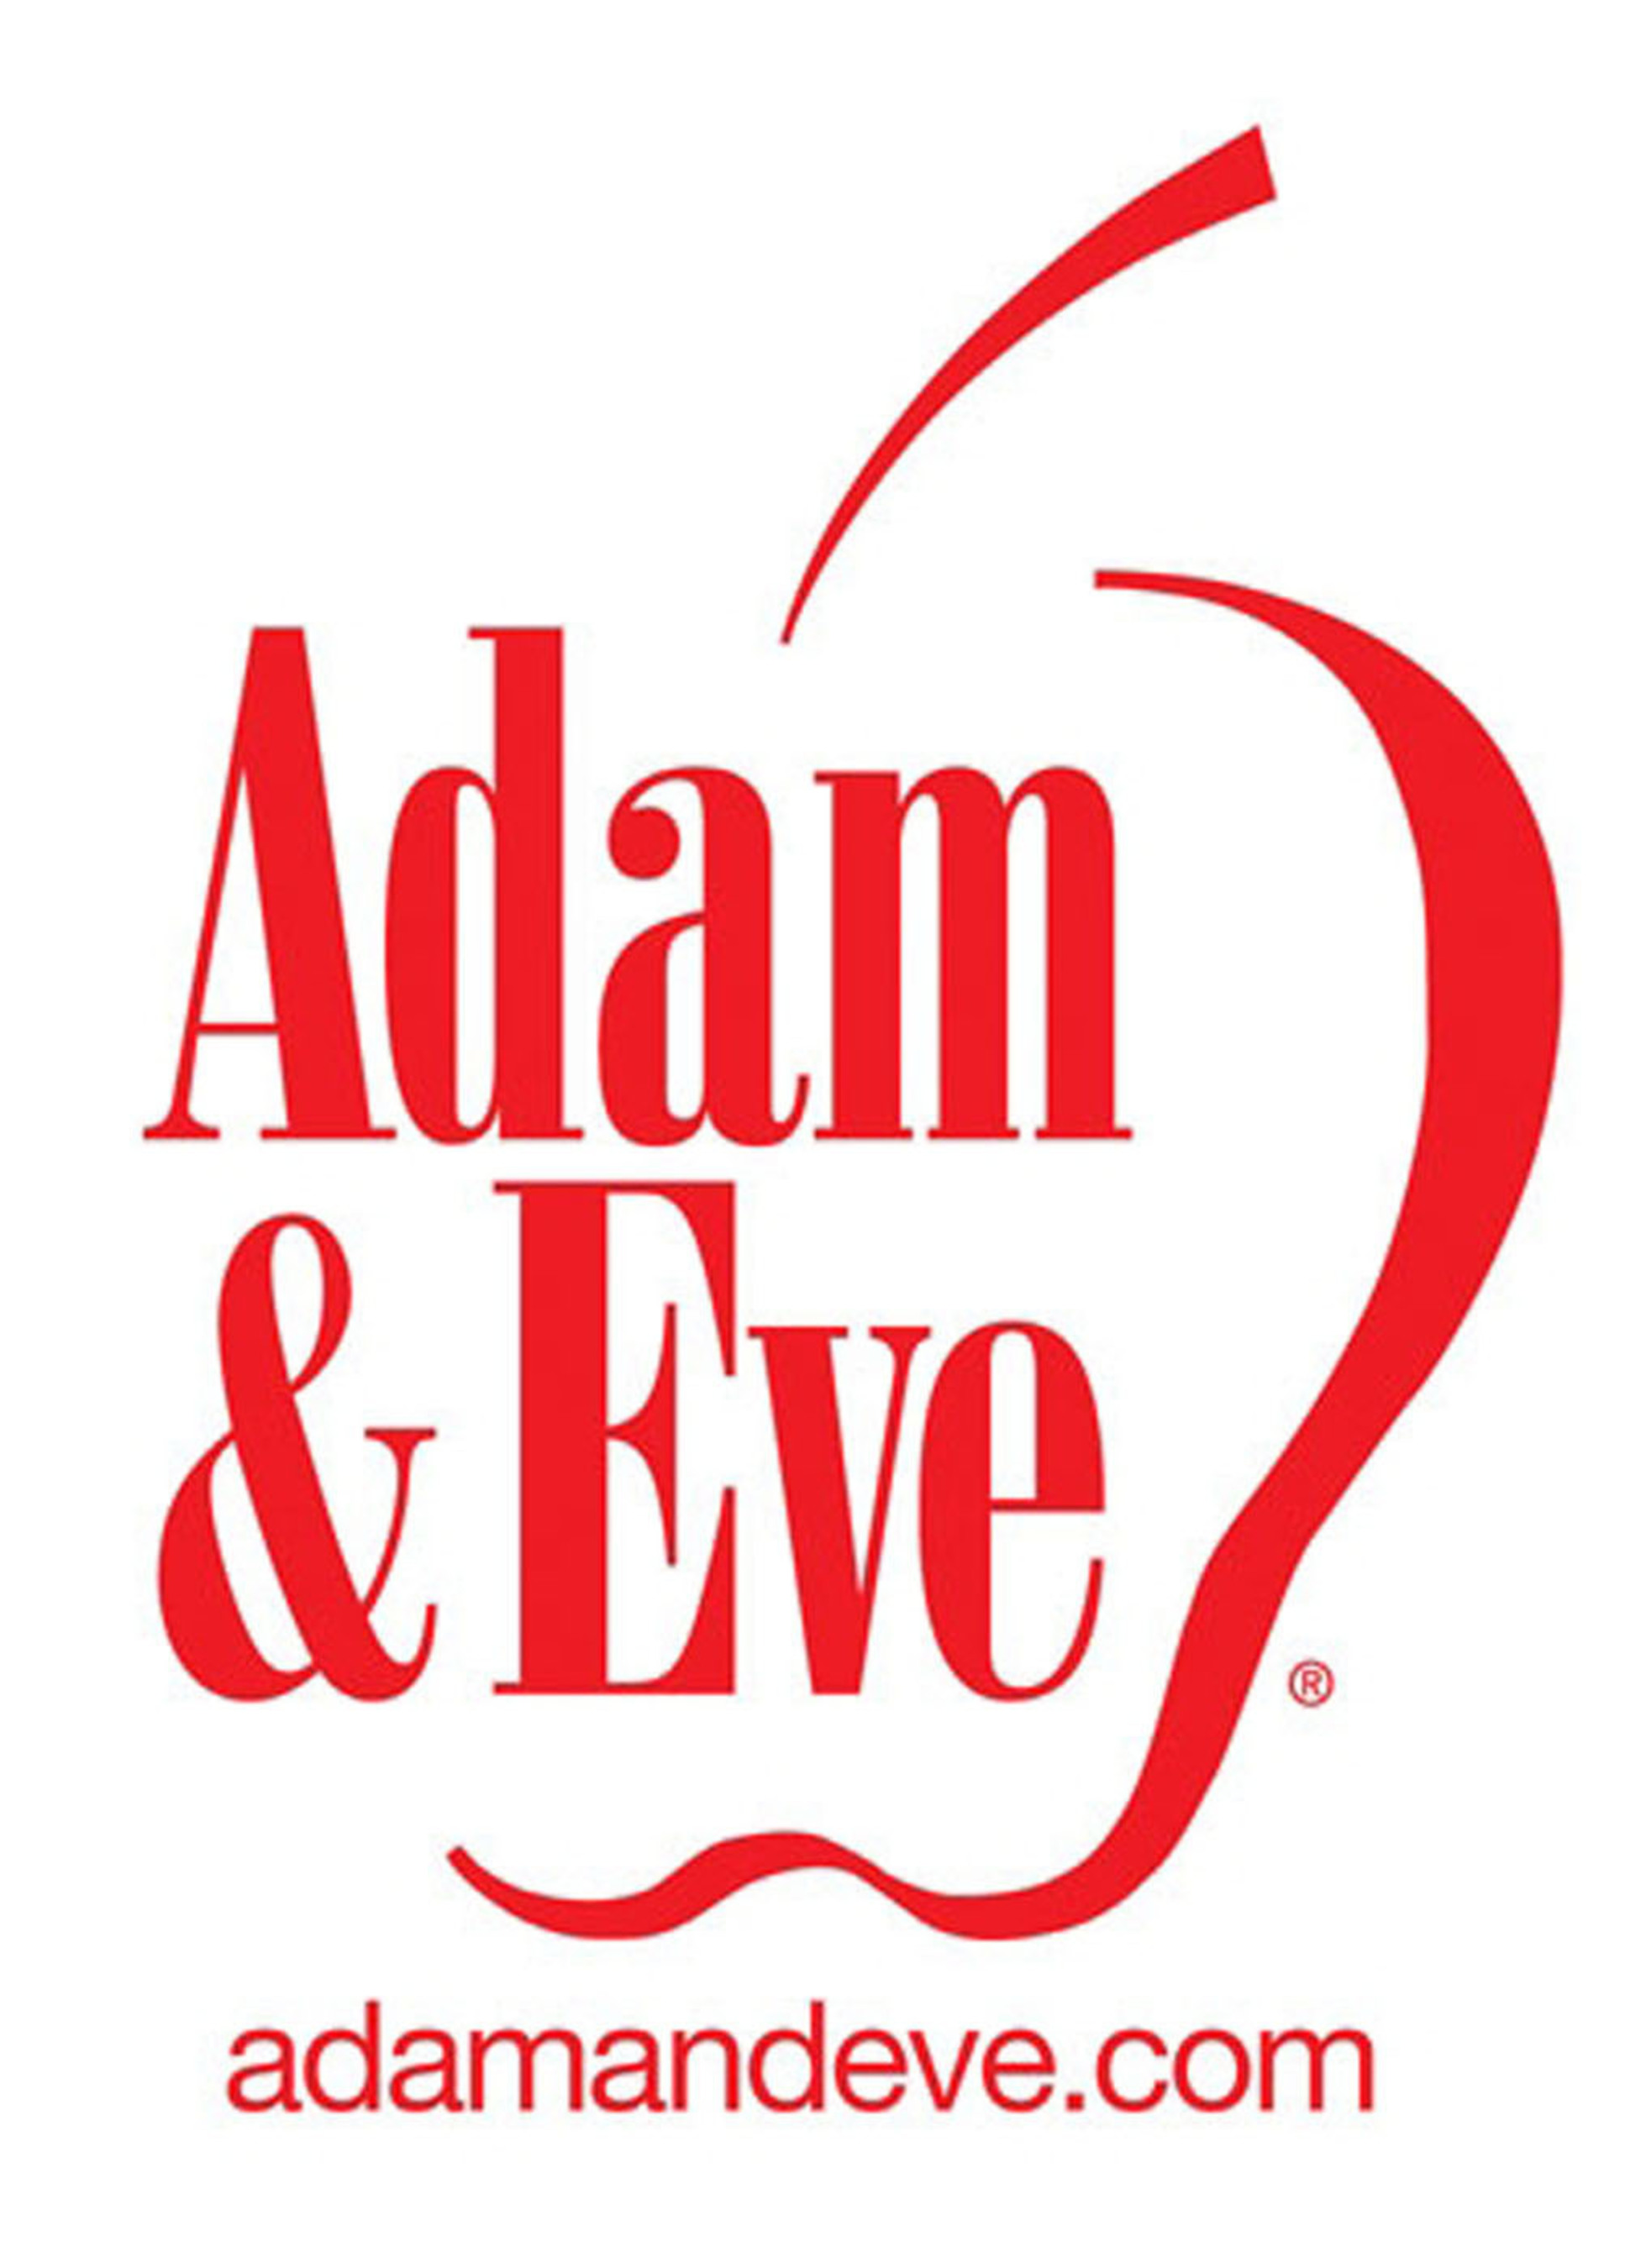 Adam & Eve LOGO.